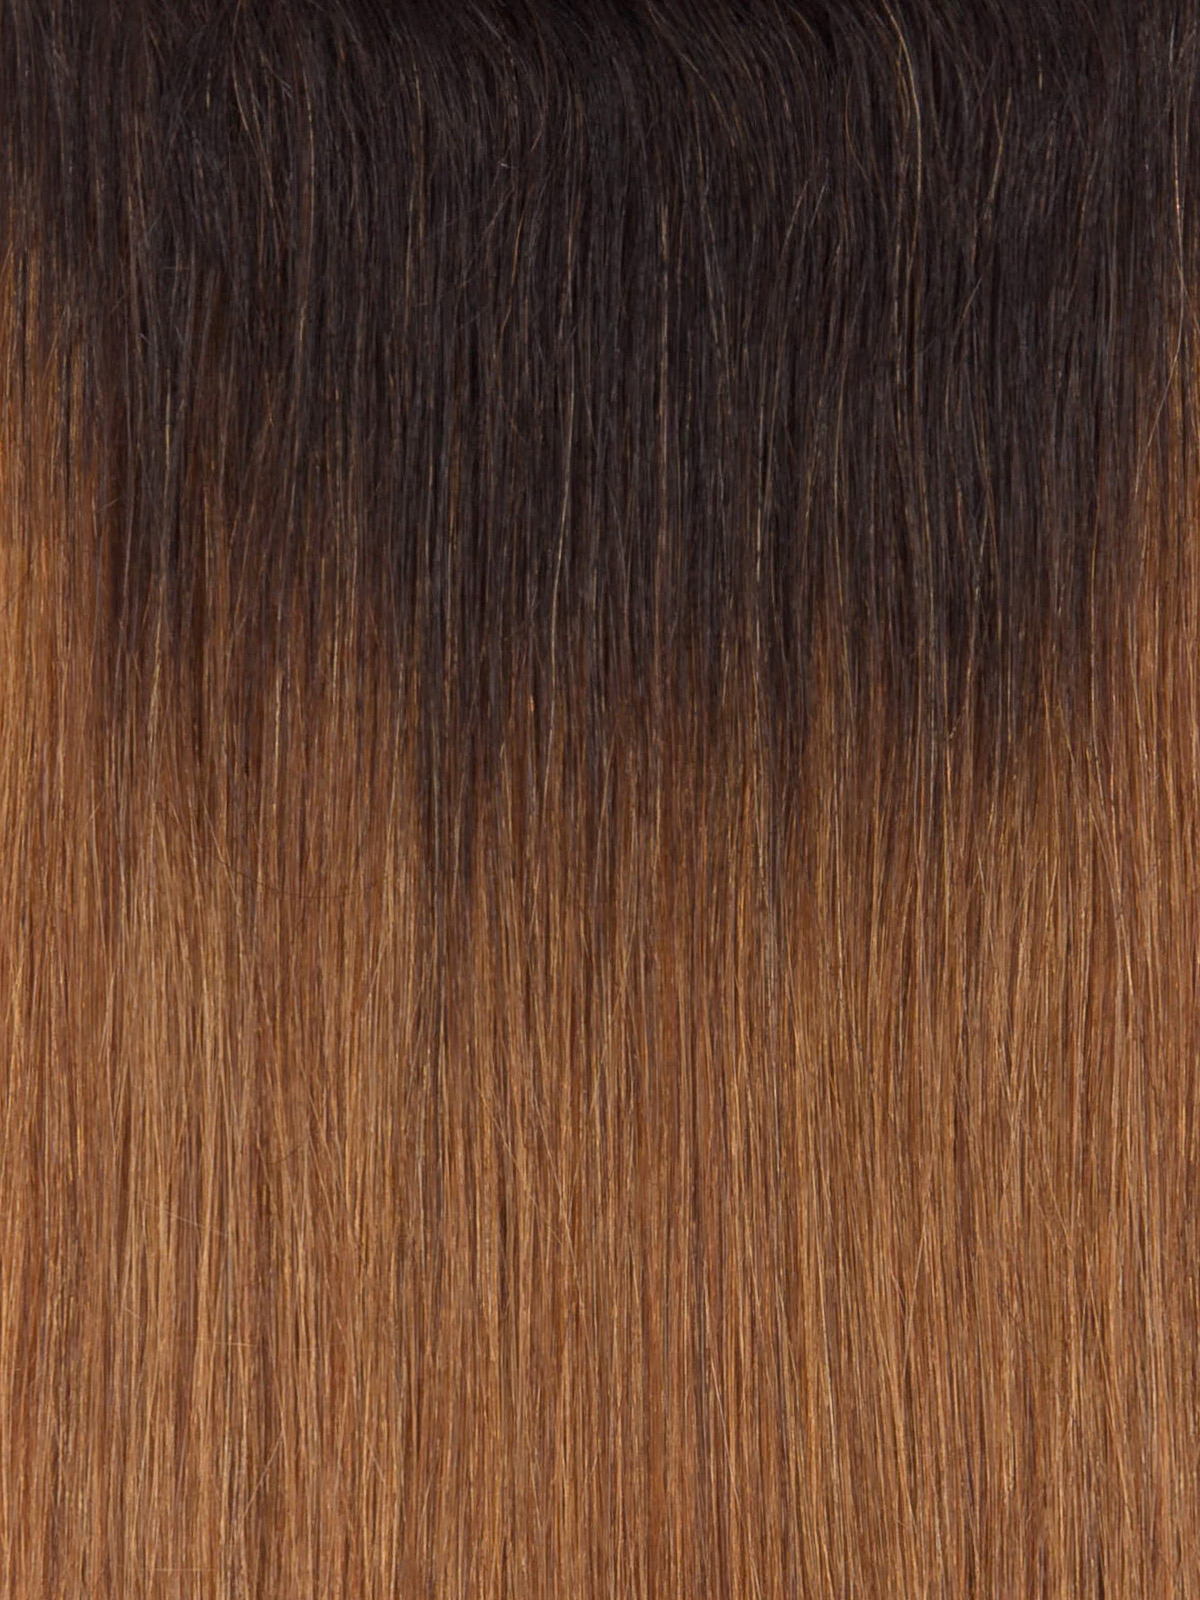 Sahar Essential Virgin Remy Human Hair Extensions 100g 8a Straight Ot30 24 Inch Hairtrade